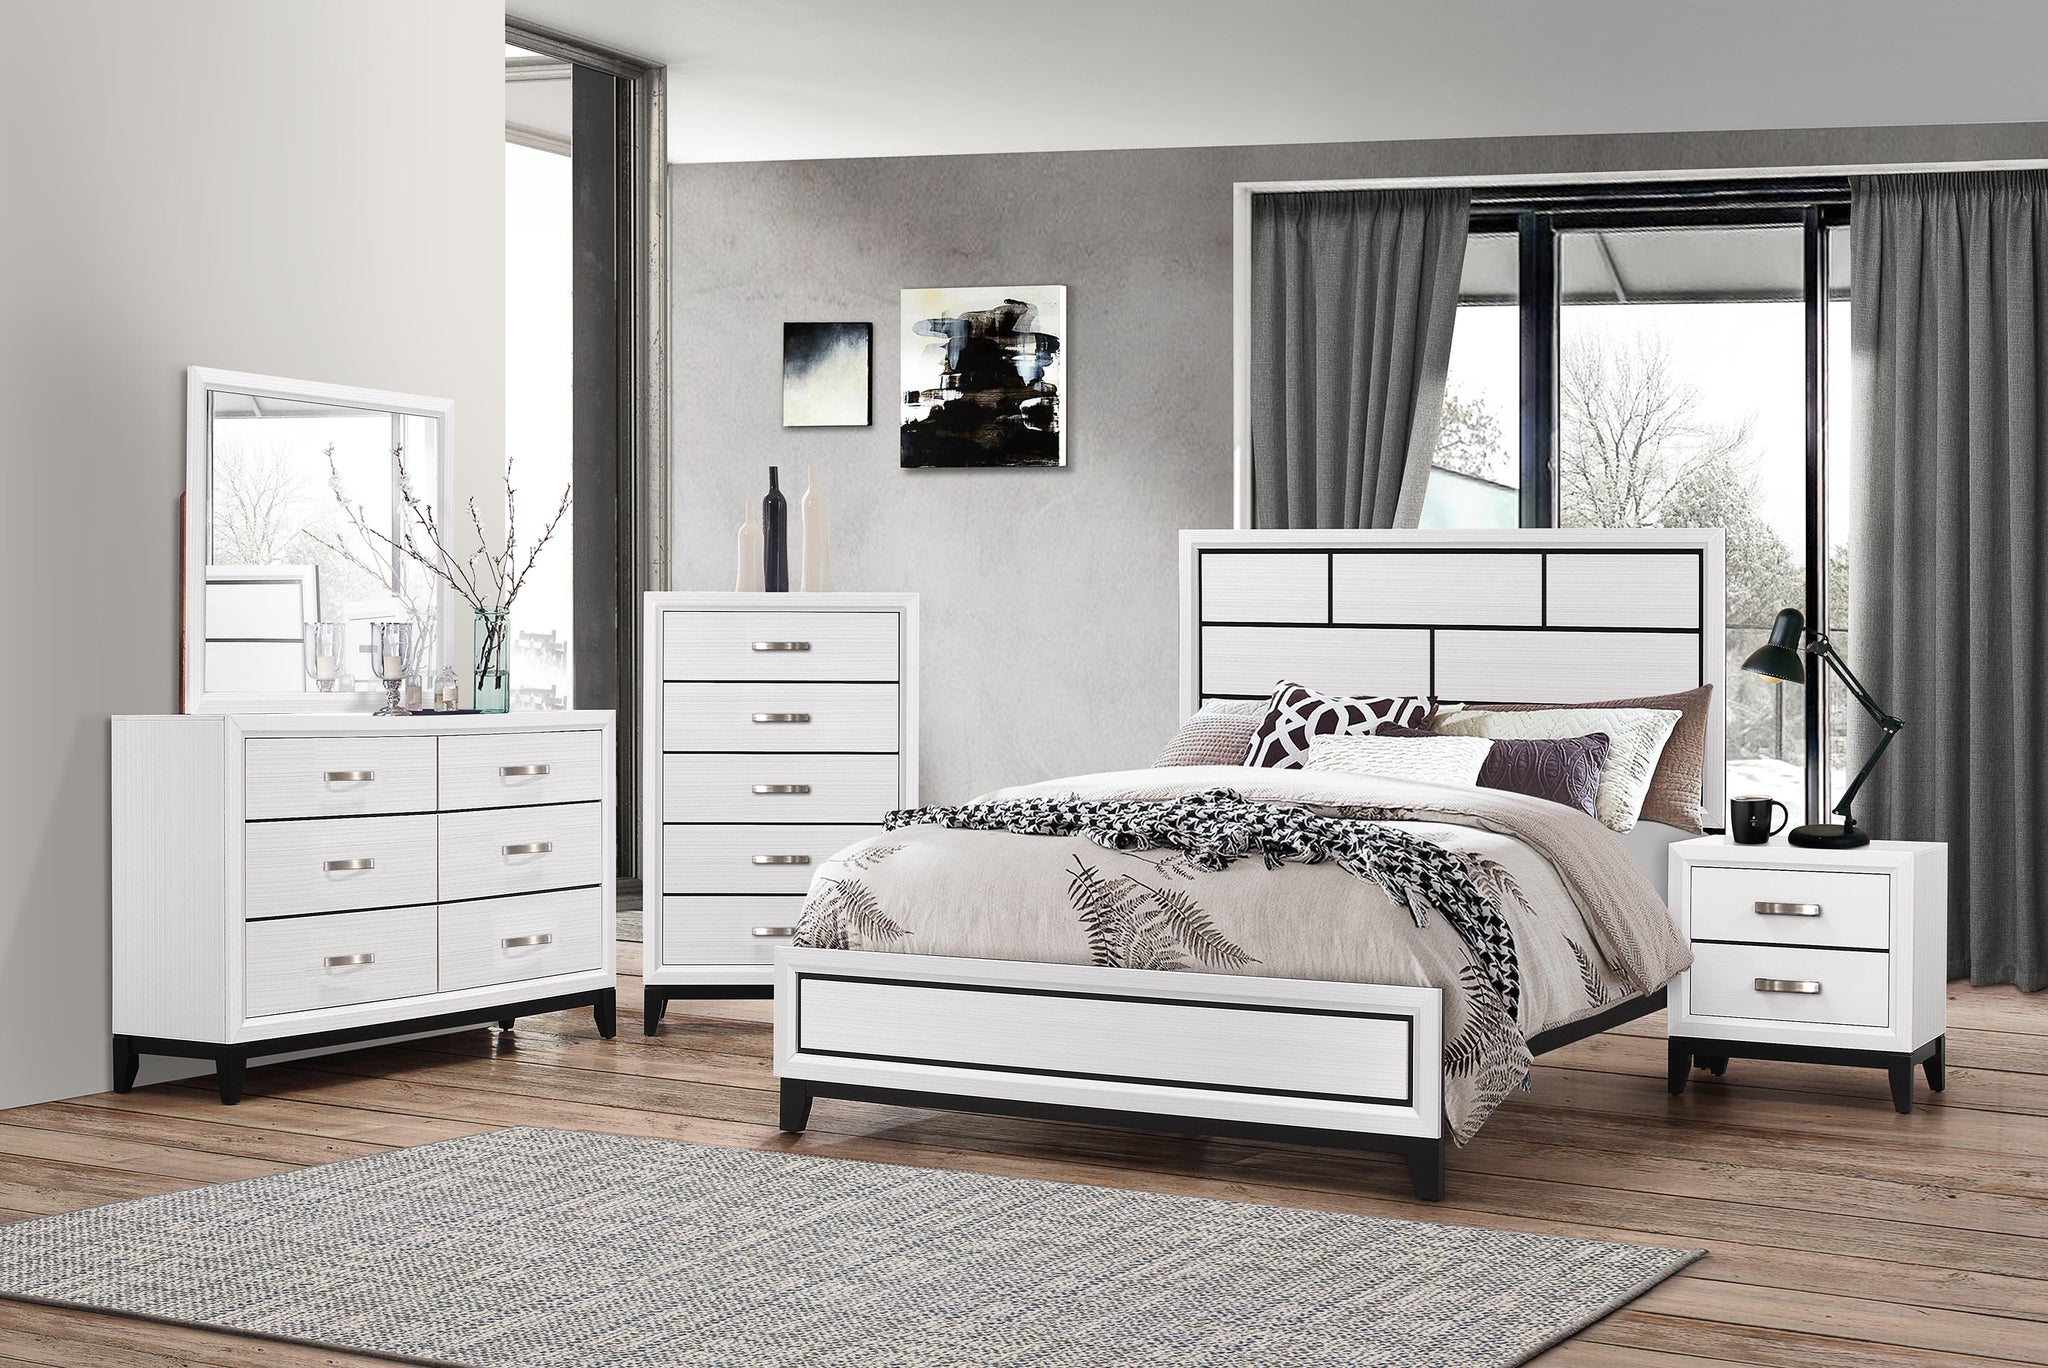 4 piece bedroom furniture set ikea